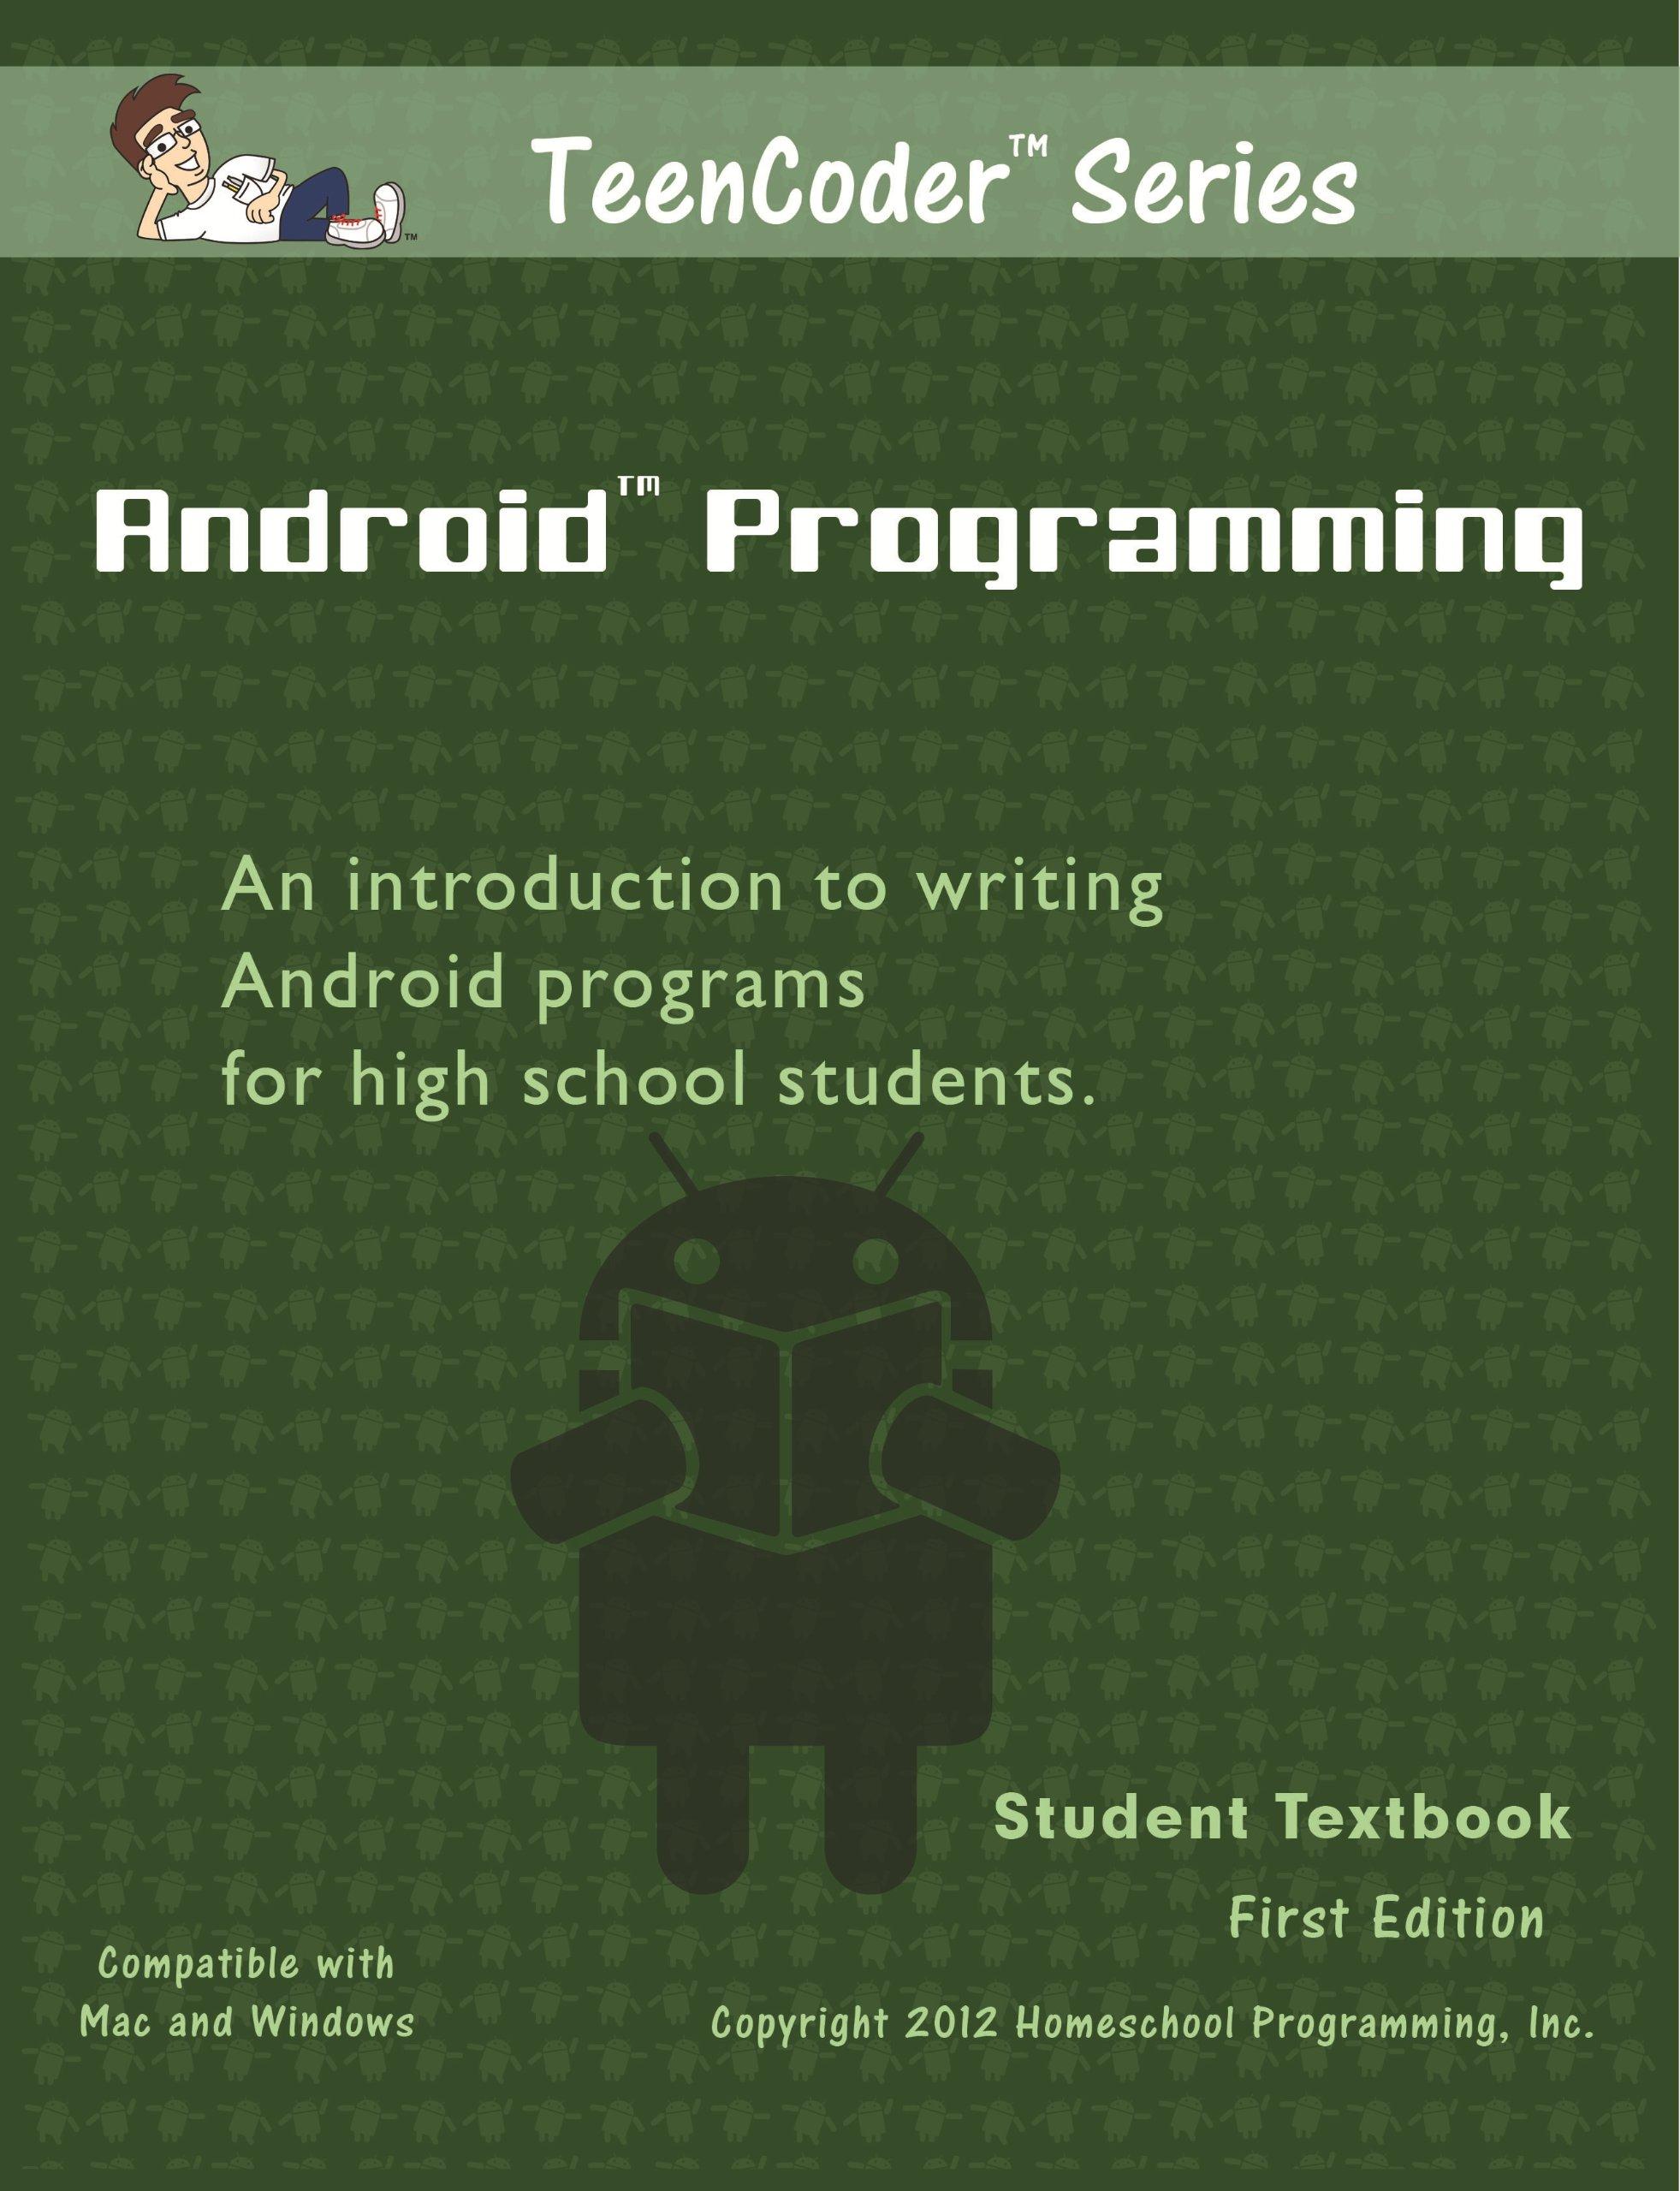 teencoder android programming teencoder java series volume 2 1st edition inc. homeschool programming